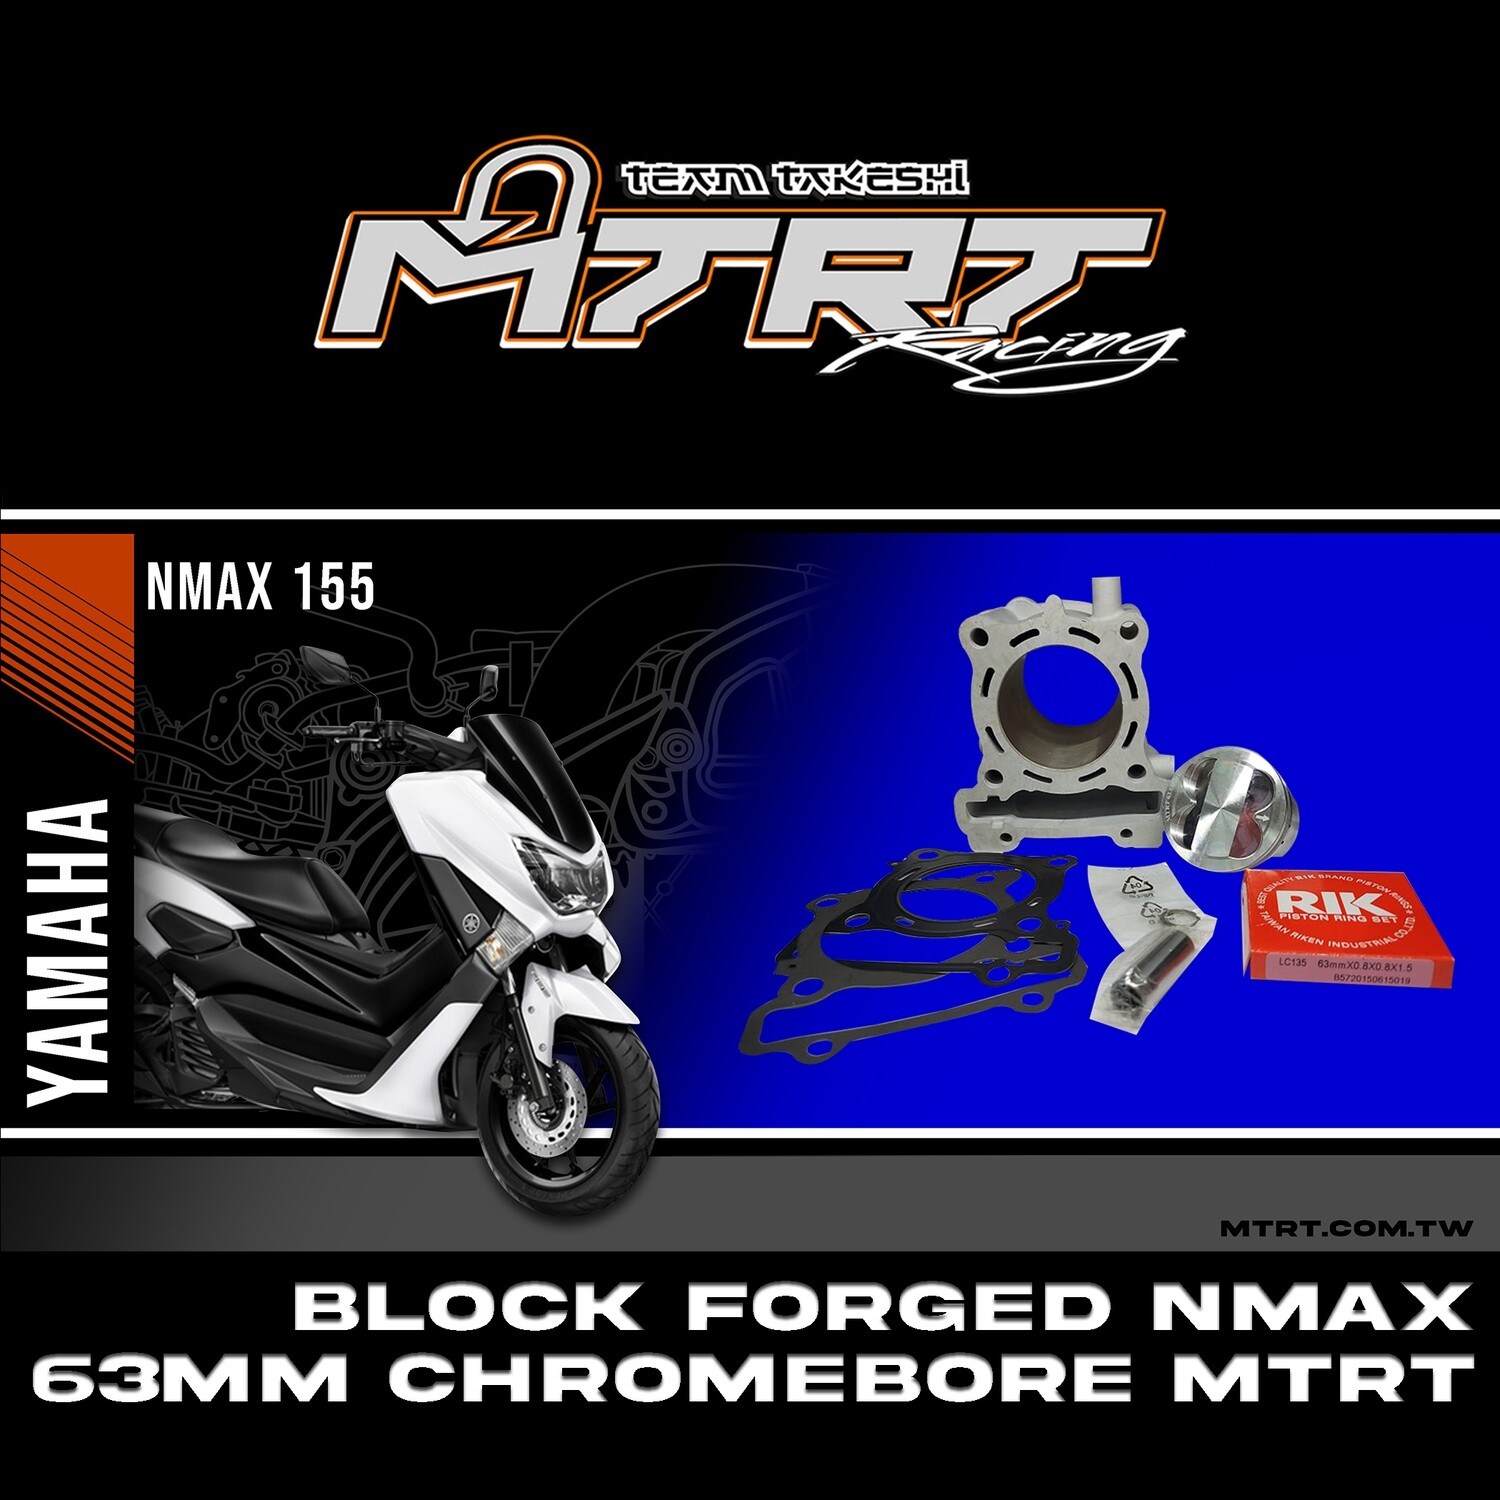 BLOCK Forged NMAX/AEROX/R15 V3  63MM Chromebore MTRT